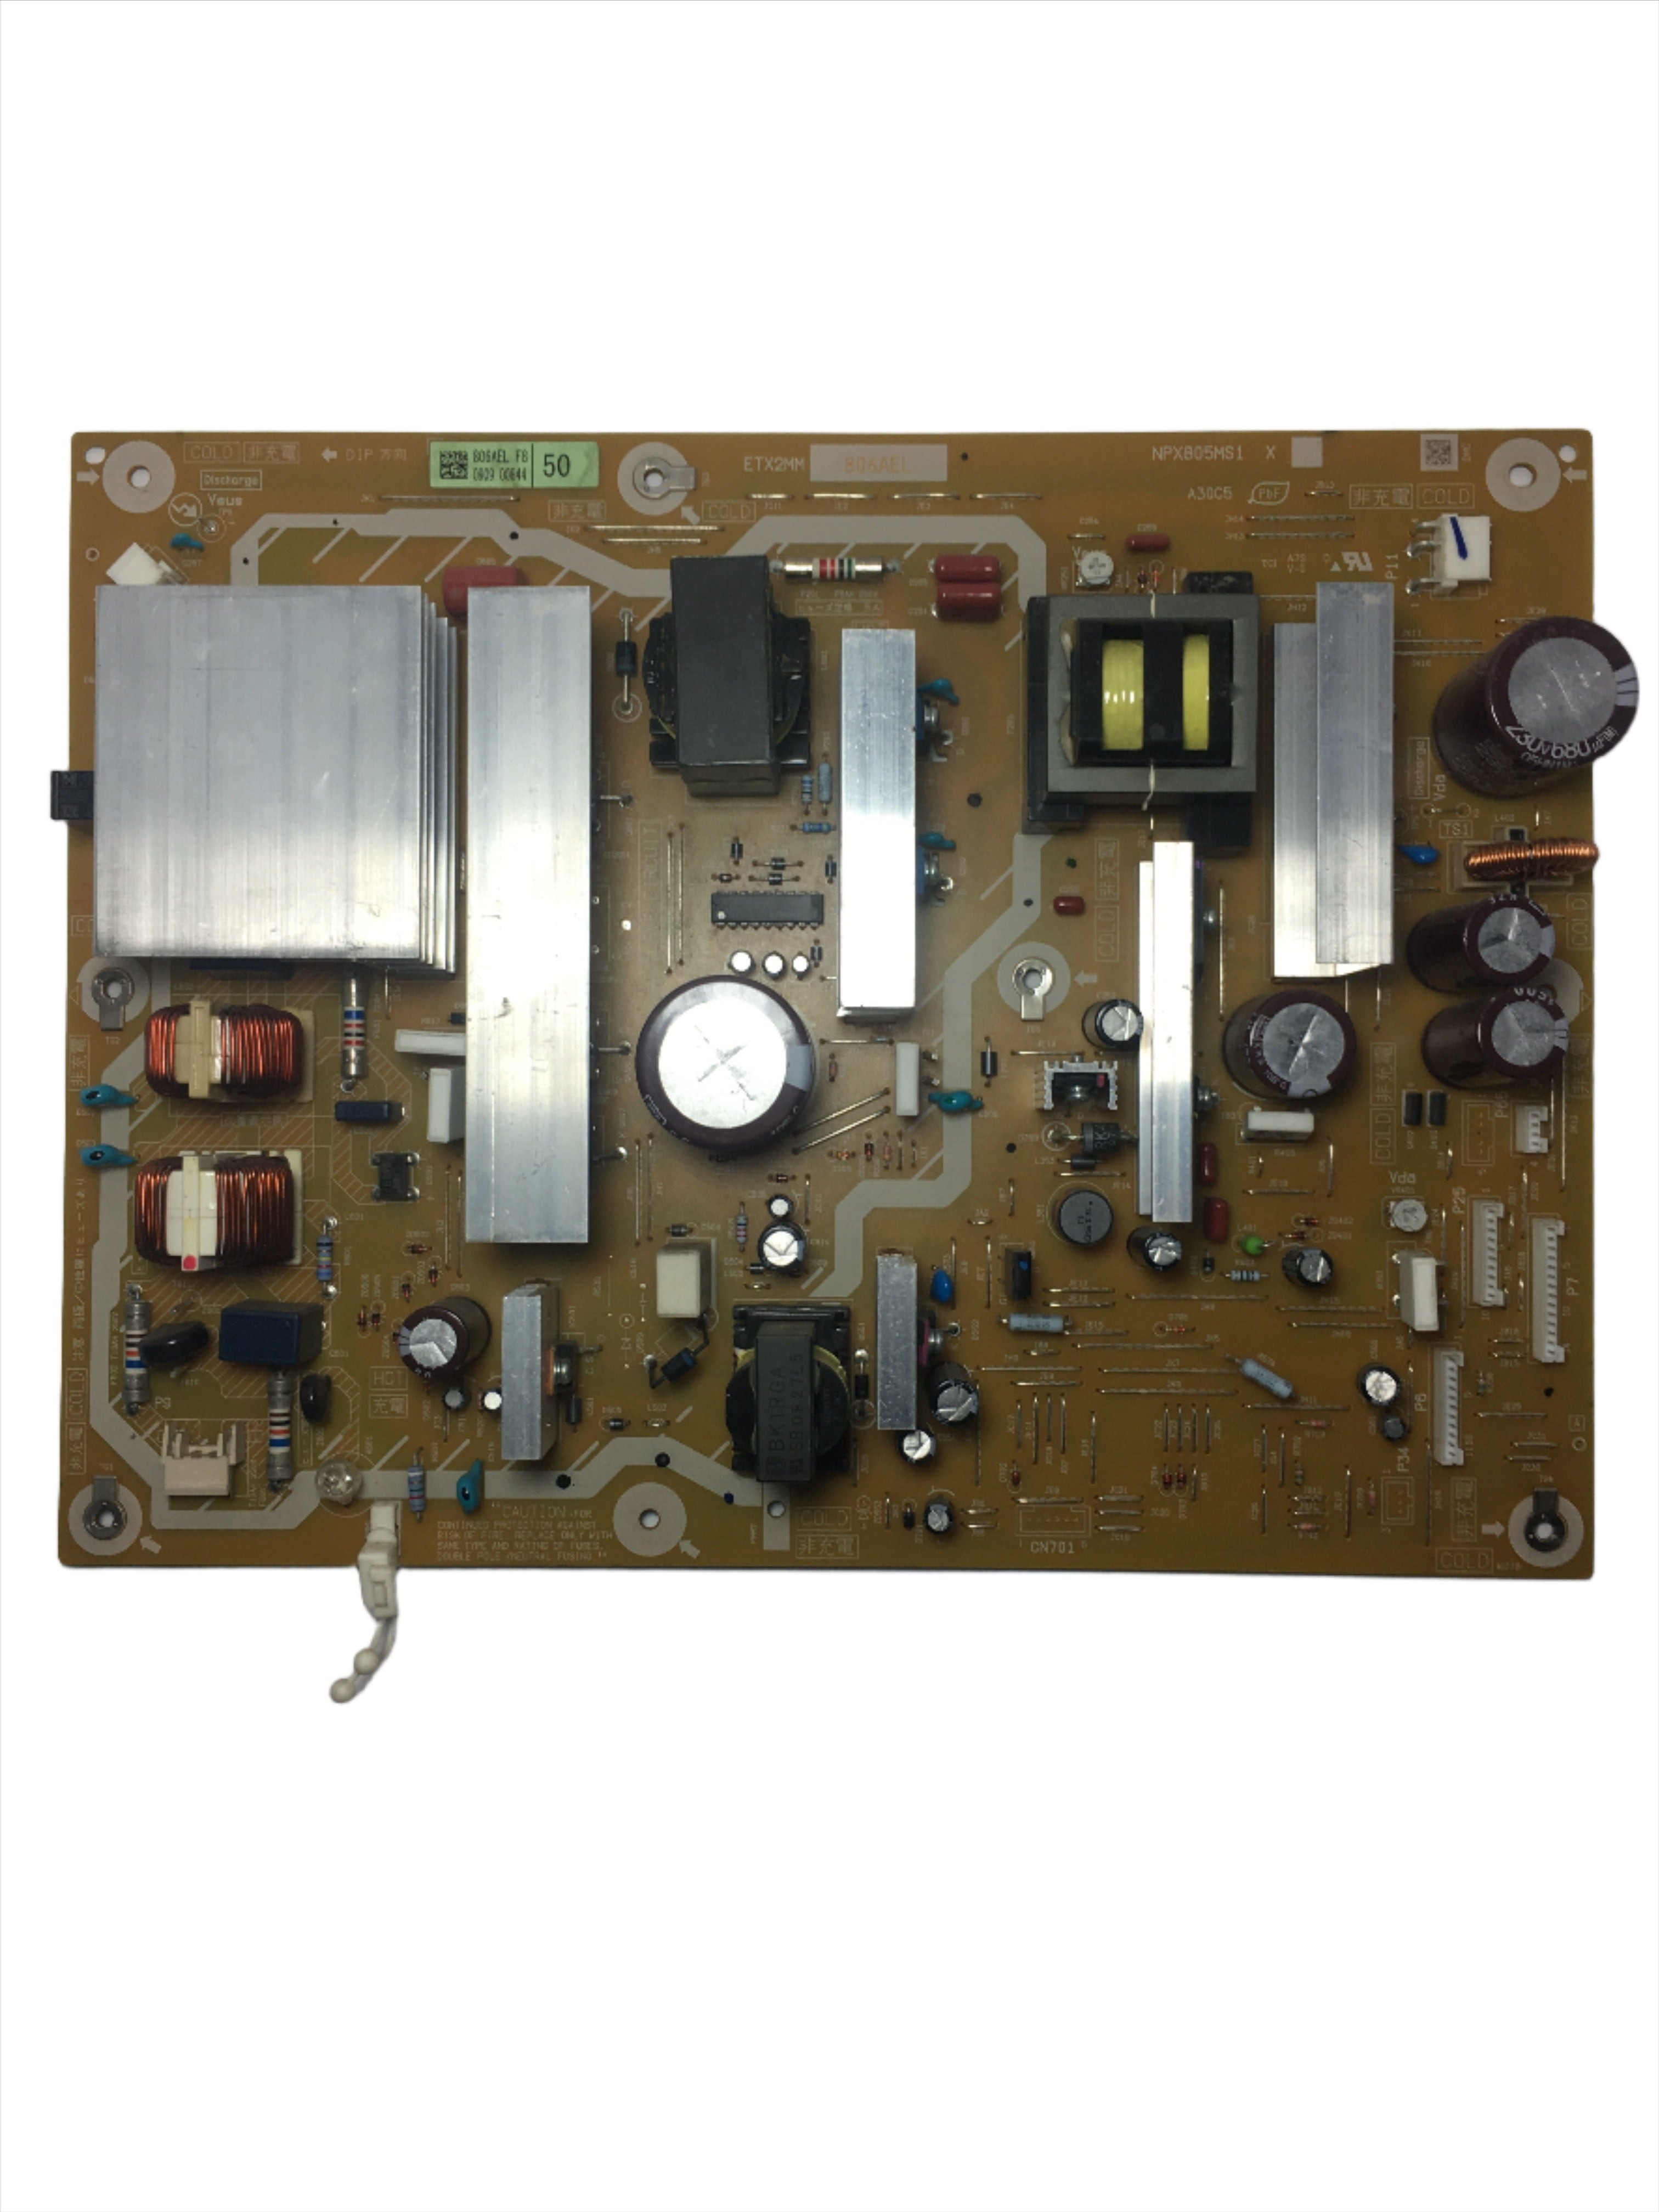 Panasonic ETX2MM806AEL (NPX805MS1) Power Supply